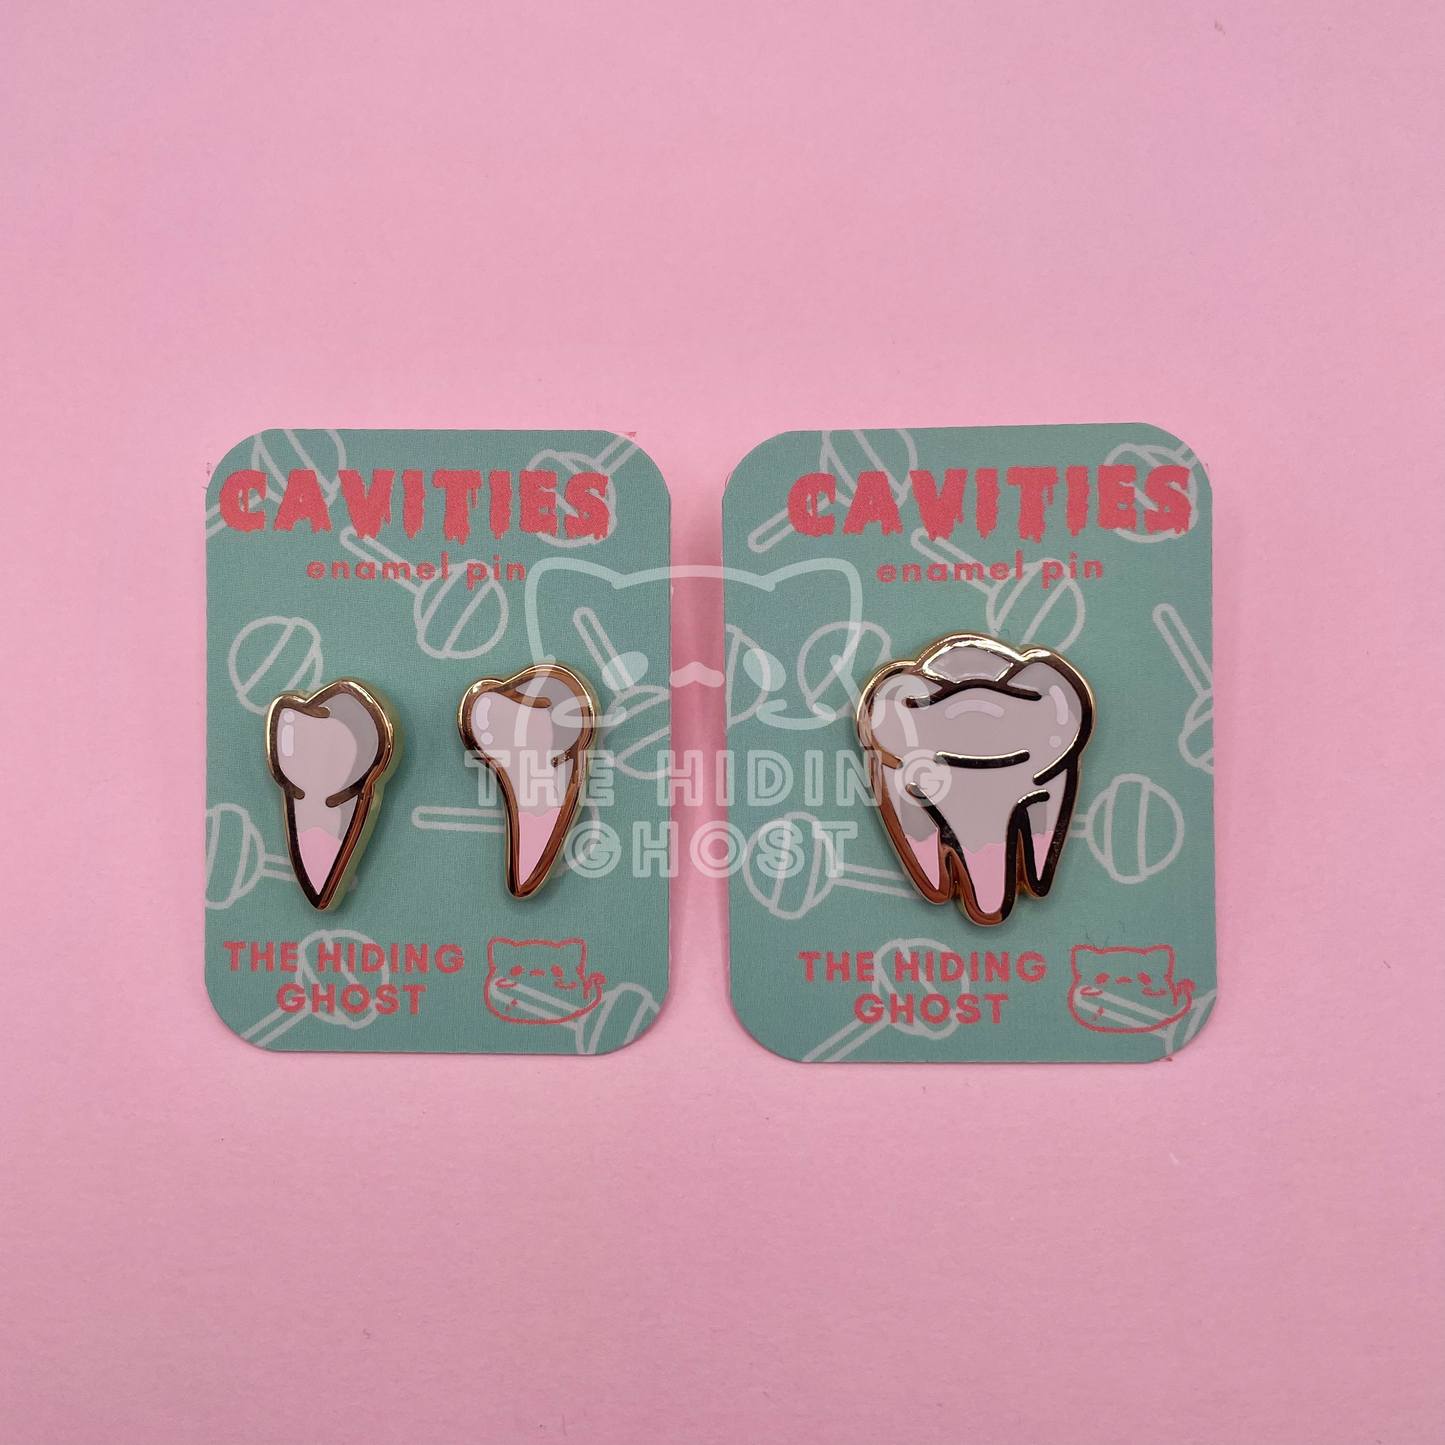 Cavities - Molar Filler Enamel Pin